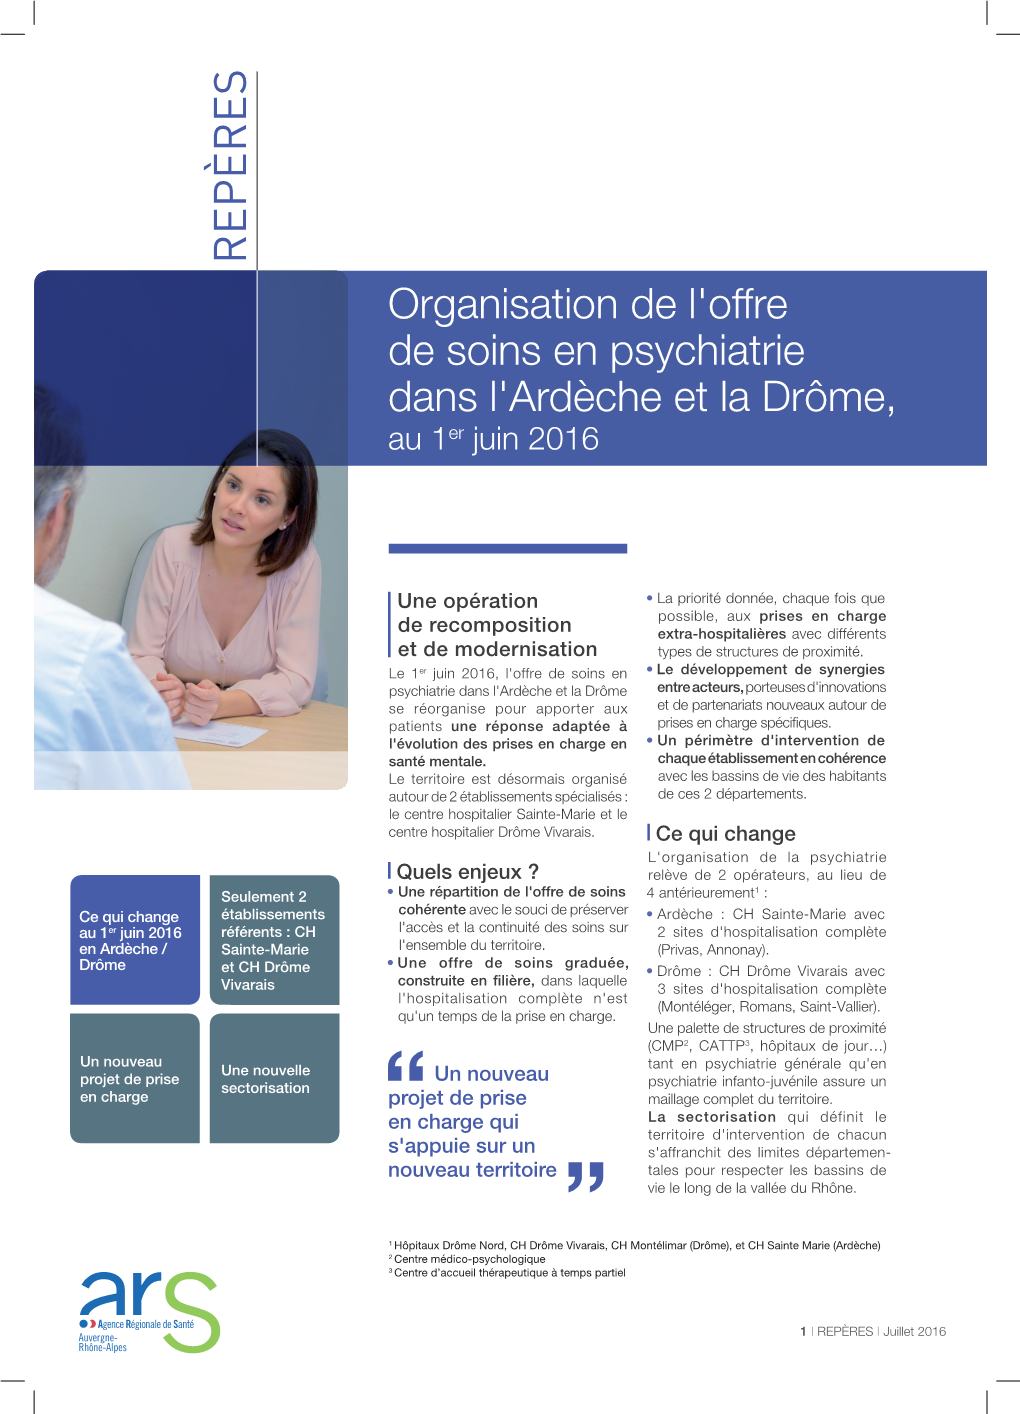 Organisation Psychiatrie Drôme Ardèche